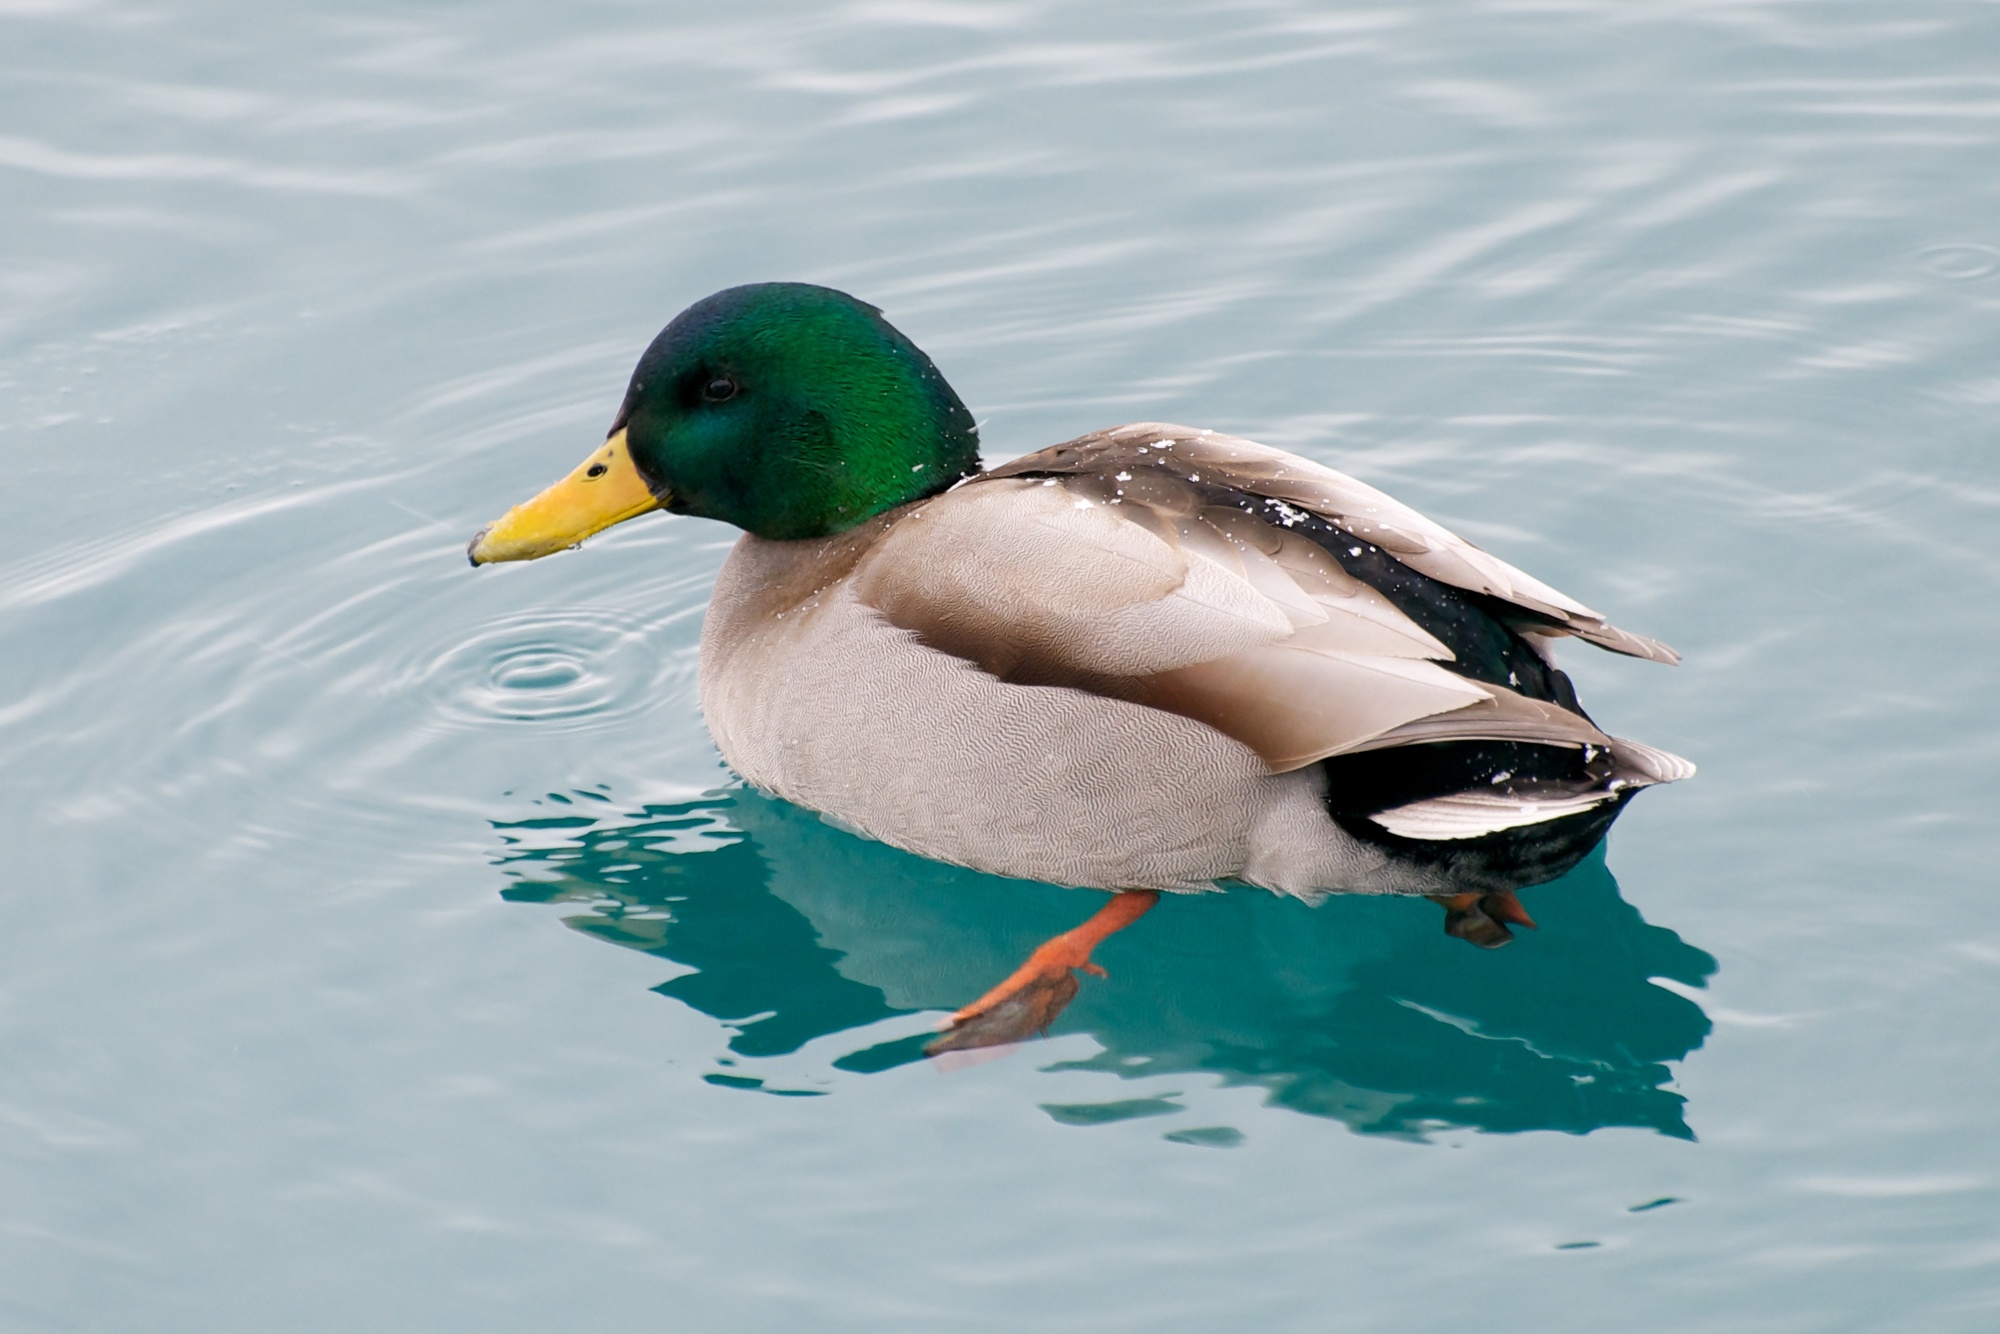 A healthy male mallard is shown. Mallards are dabbling, non-diving ducks.